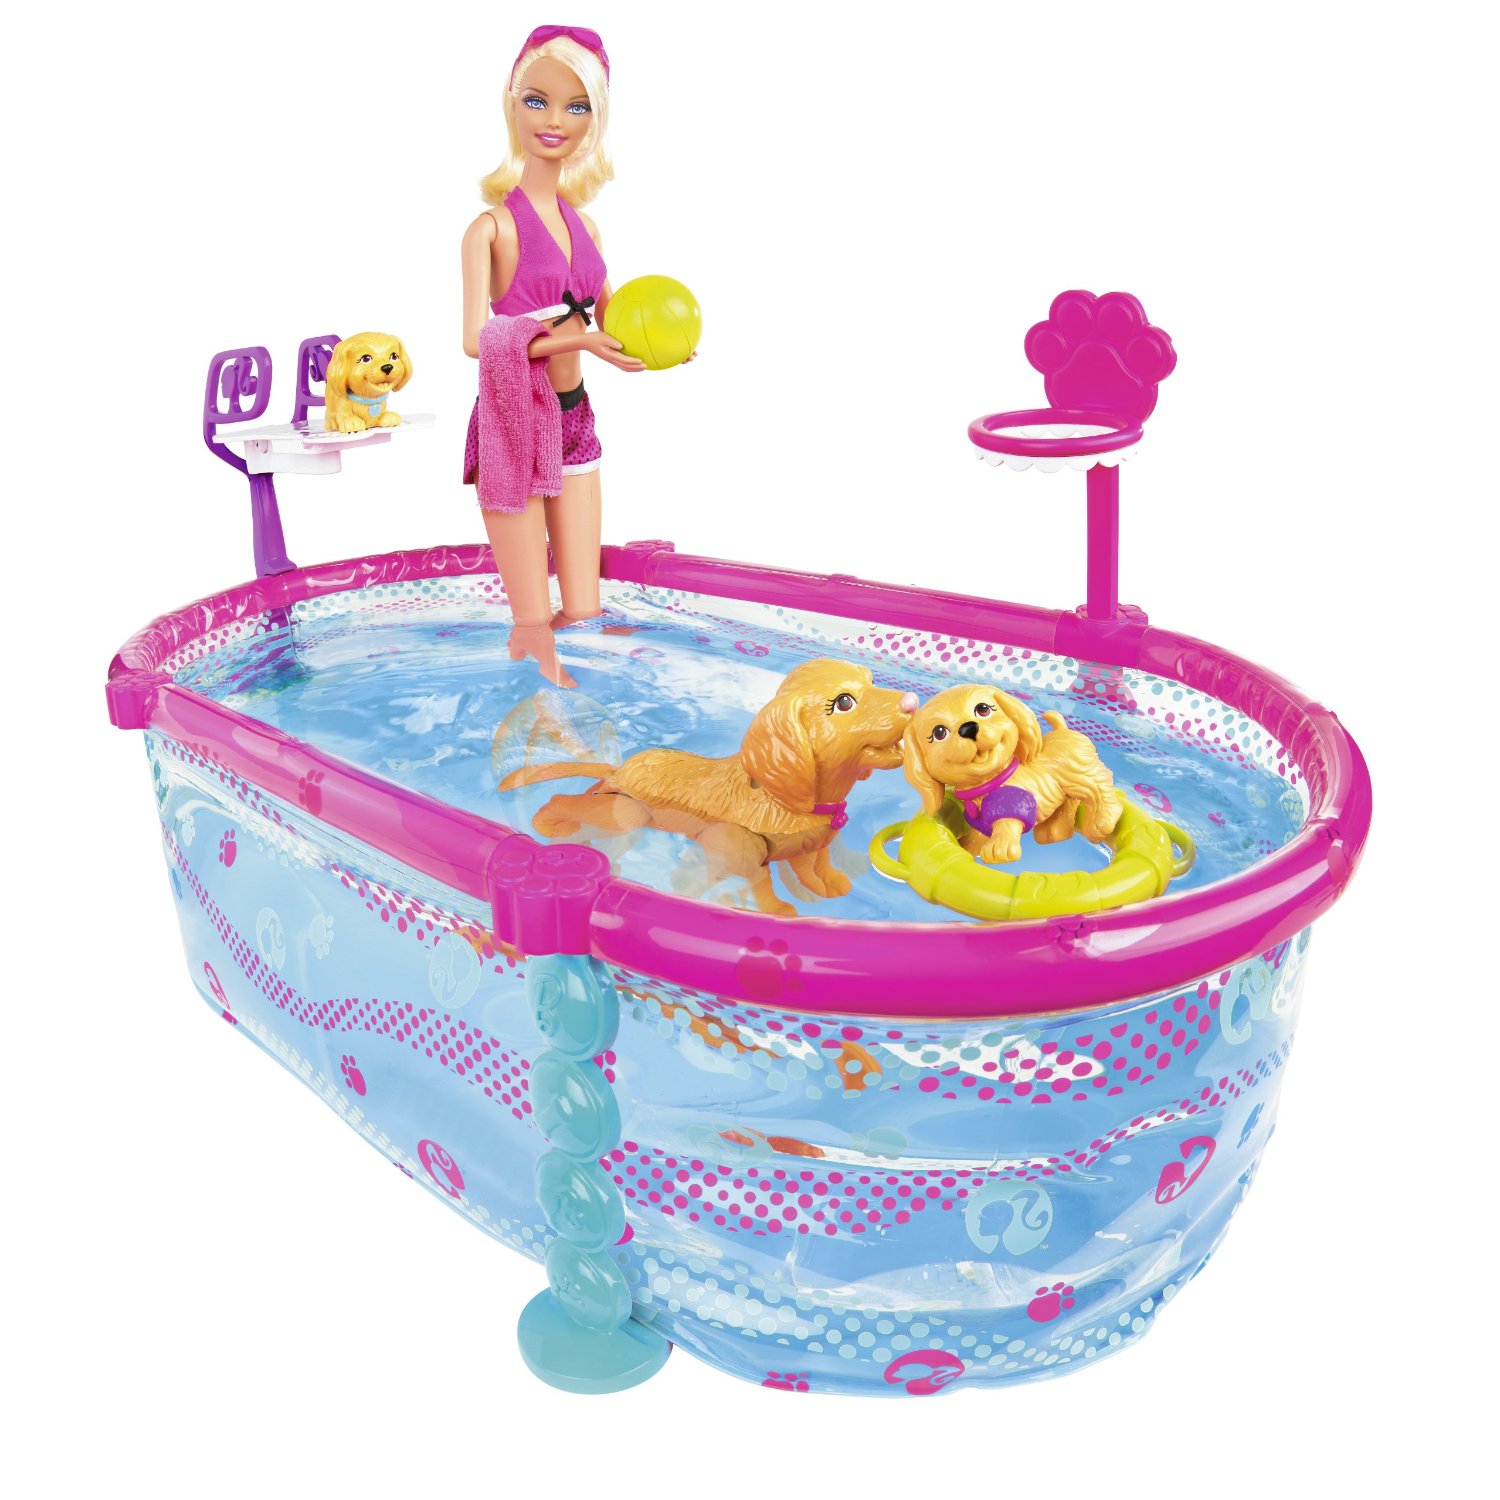 Игрушка купаться. Rainbow High бассейн Барби. Барби бассейн для щенков. Набор Barbie бассейн для щенков, 30 см, dmc32. Барби свиминг пул.